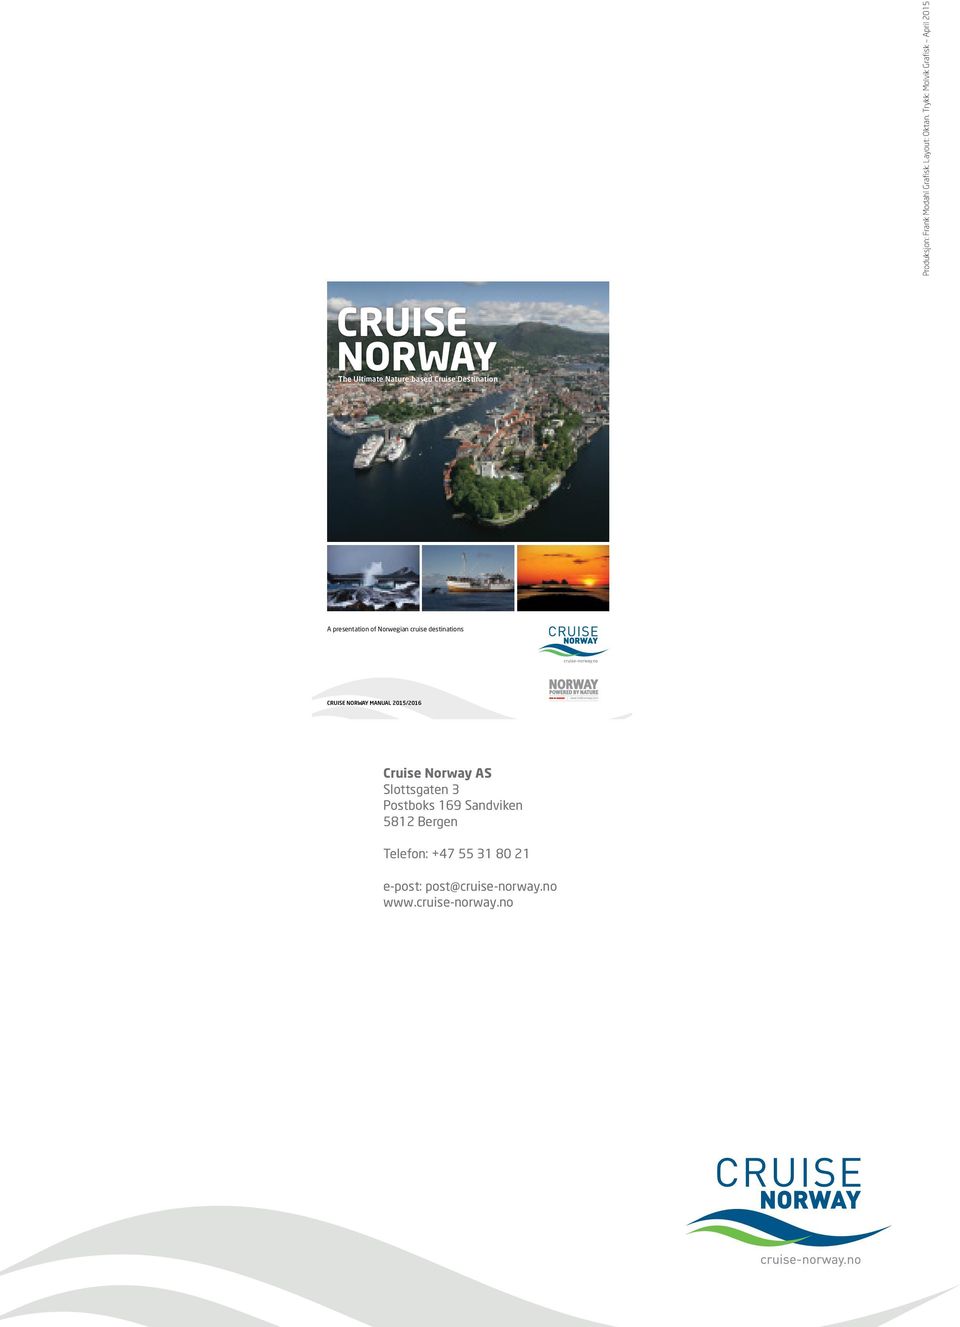 Destination A presentation of Norwegian cruise destinations CrUise Norway manual 2015/2016